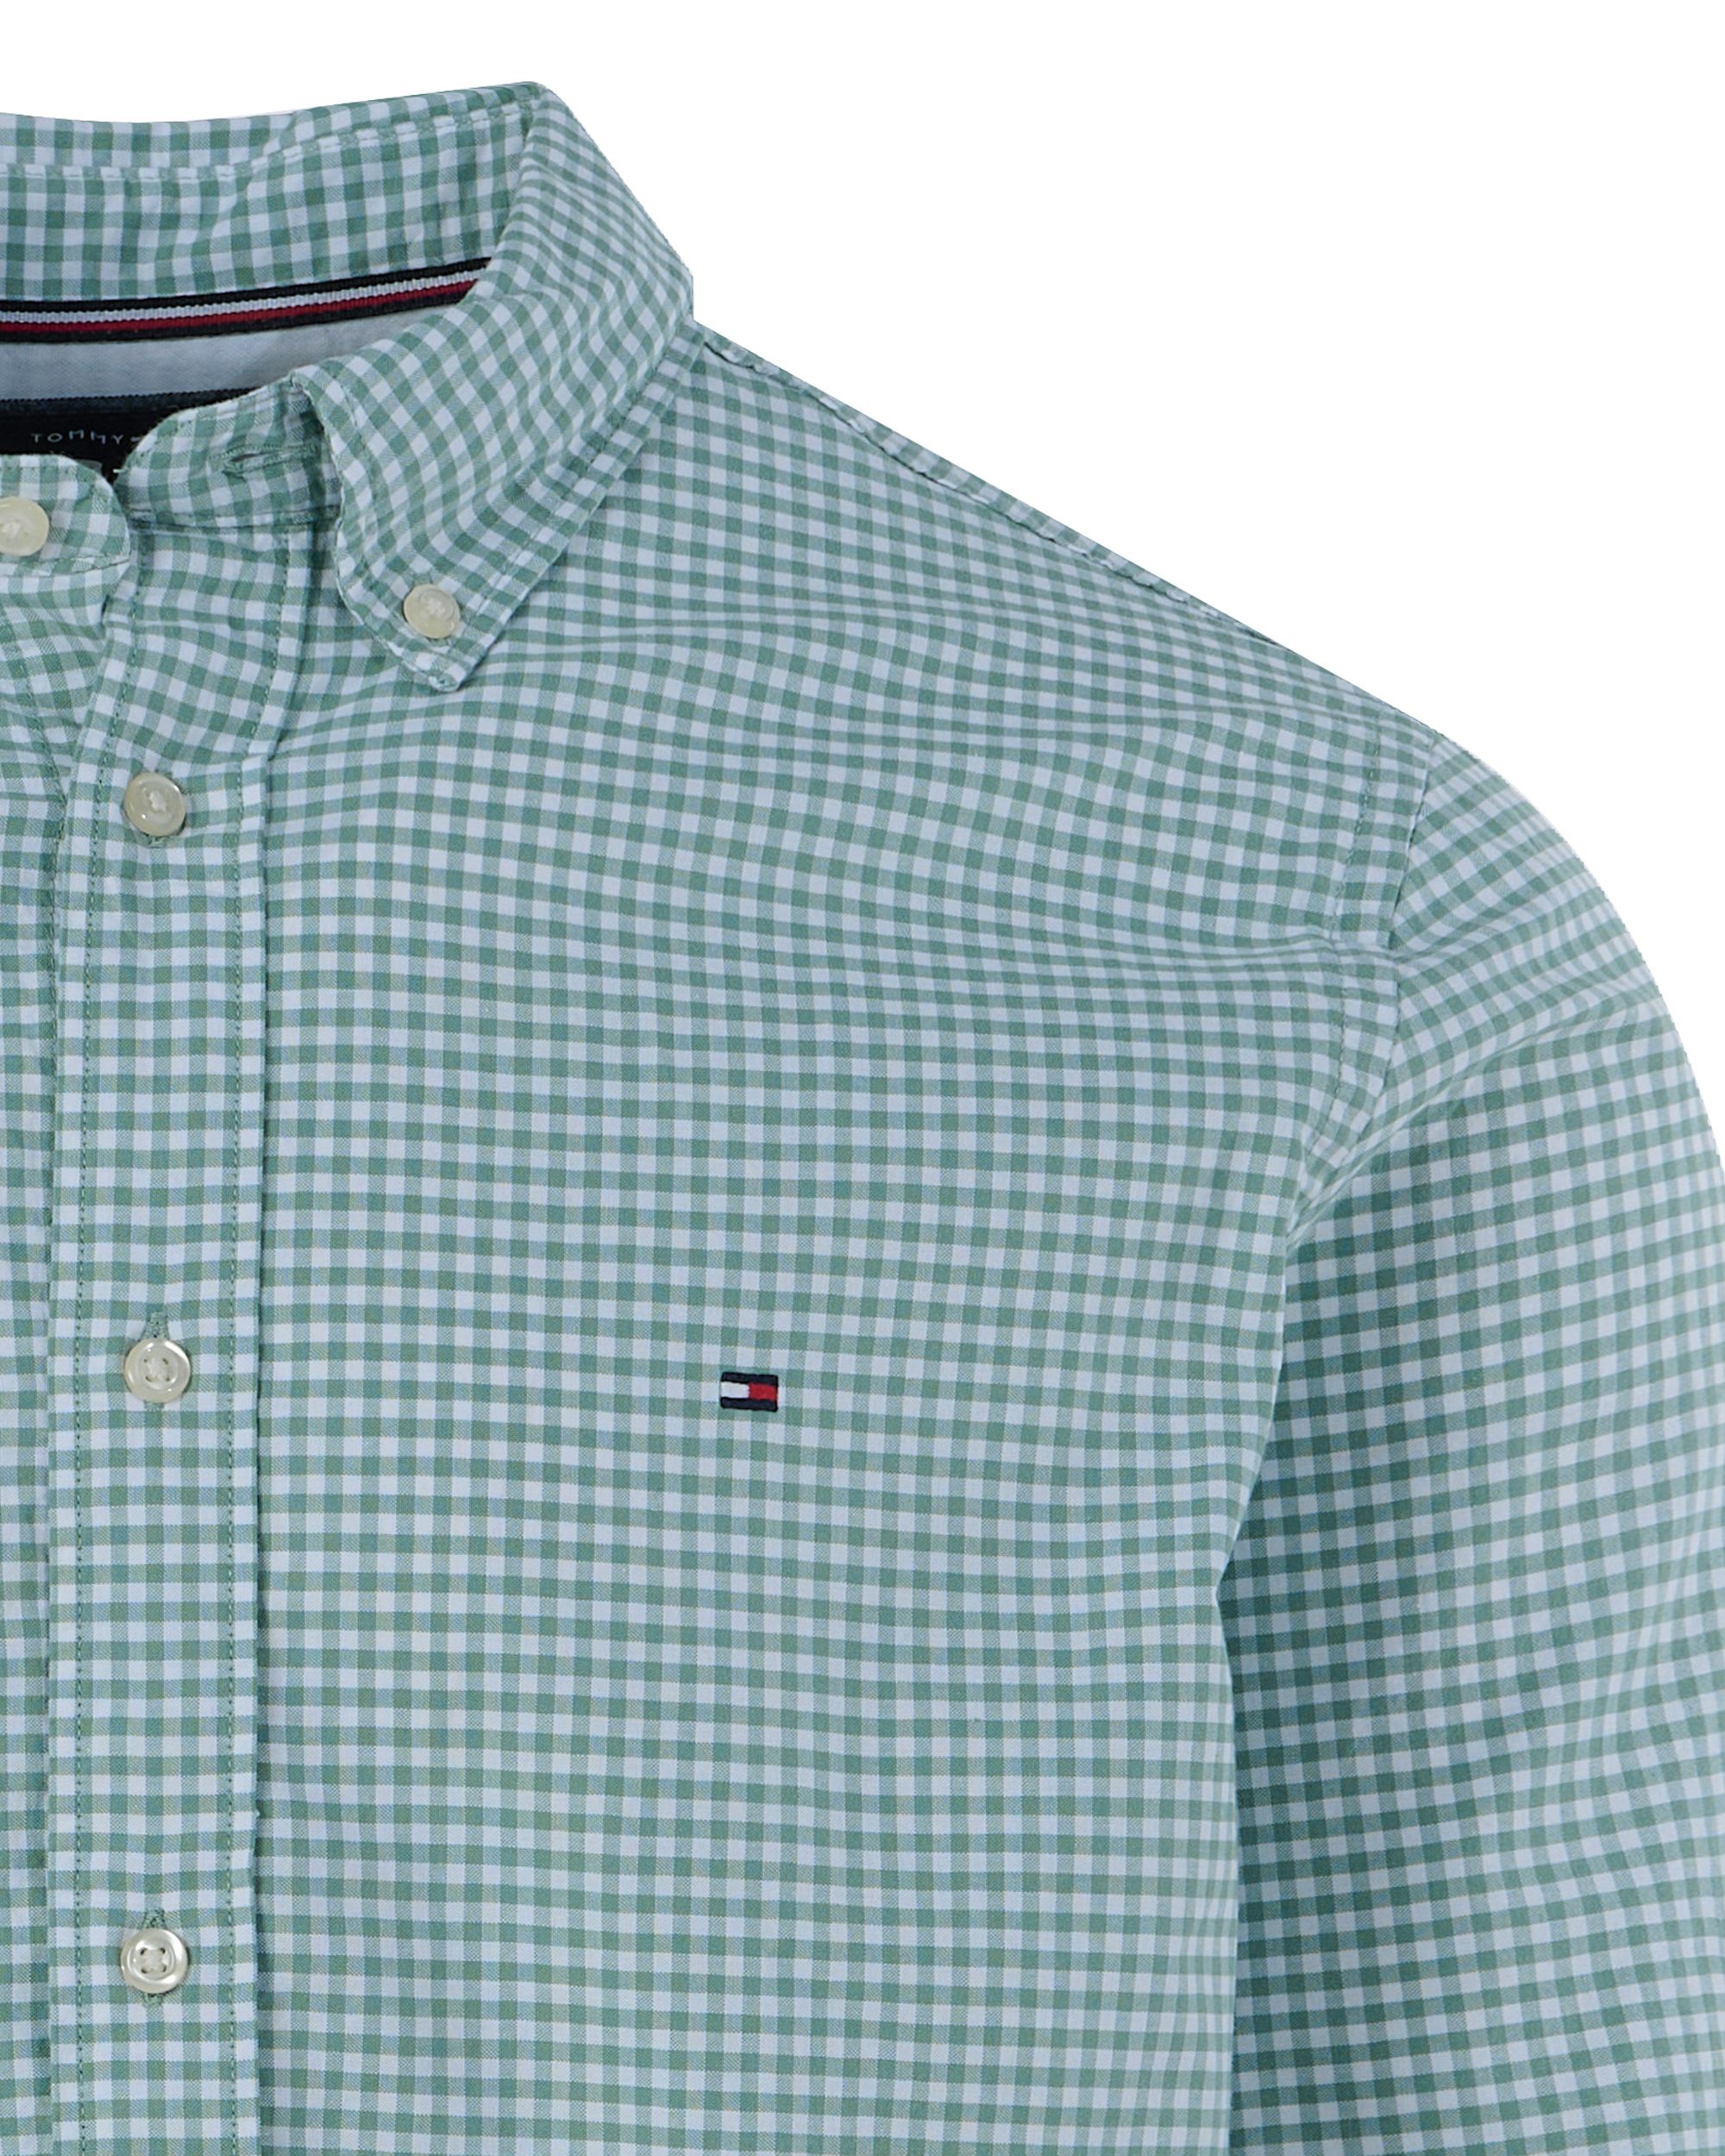 Tommy Hilfiger Menswear Casual Overhemd LM NVT 093014-001-L